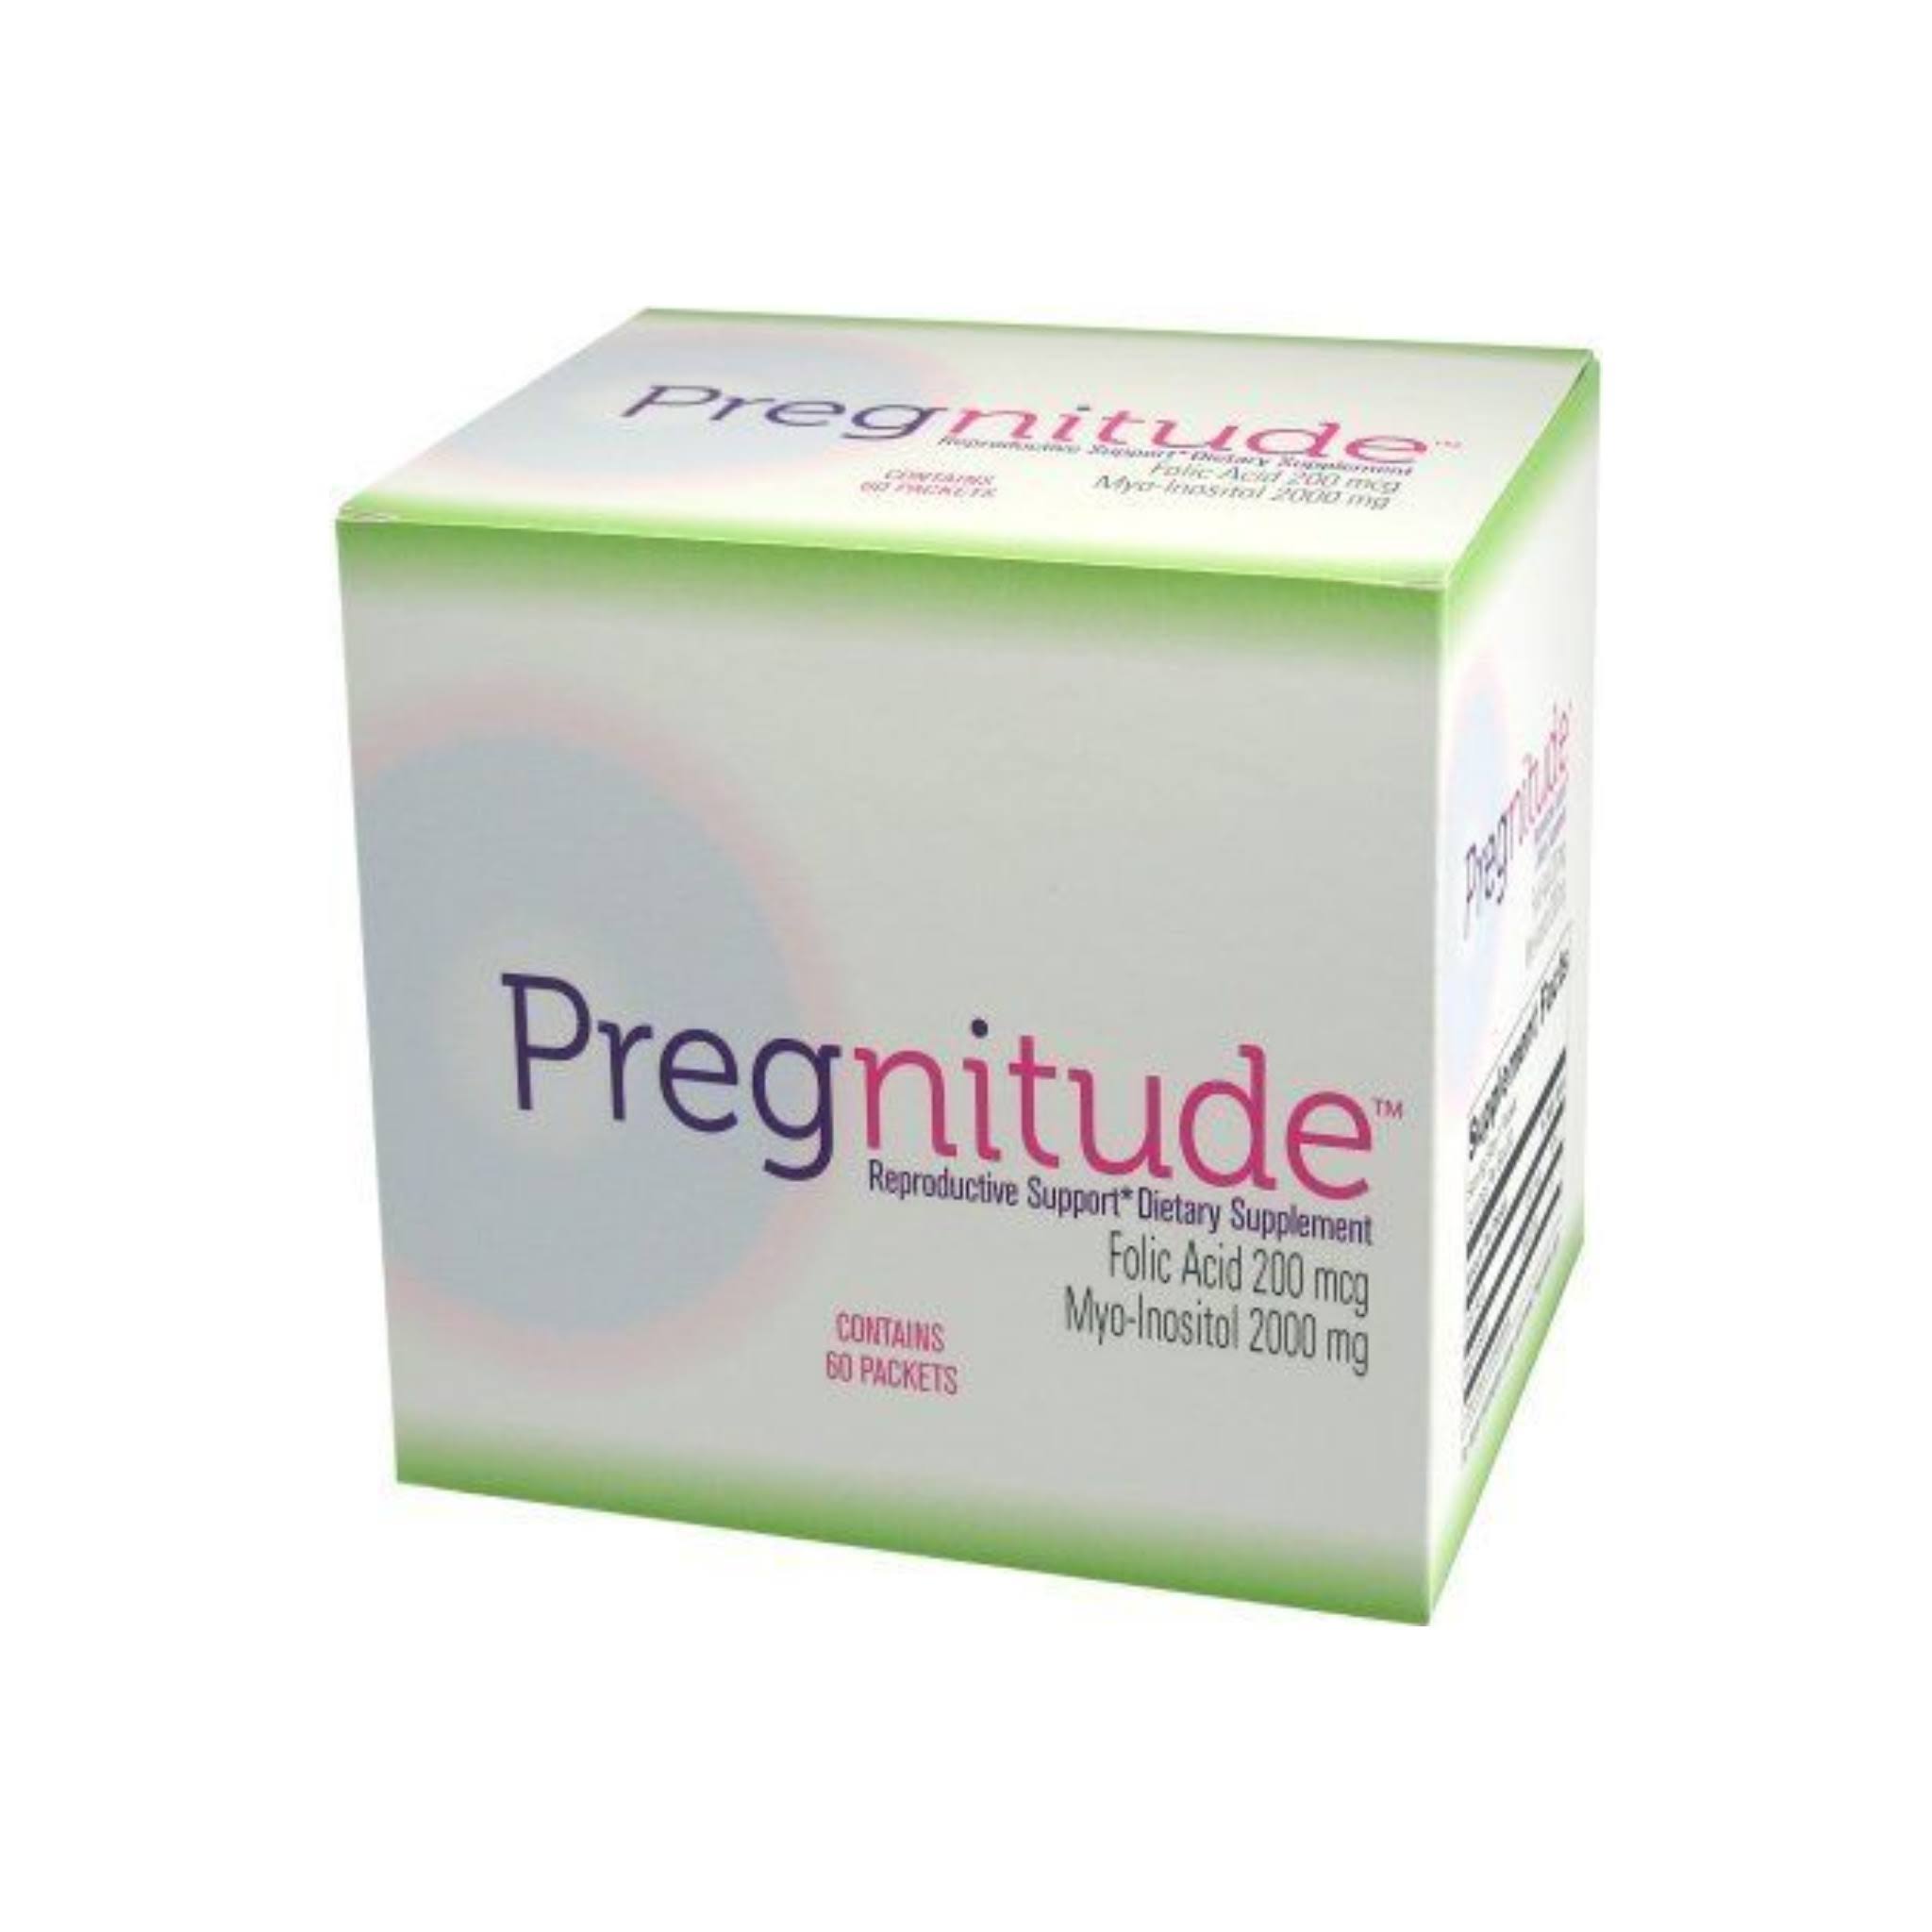 Pregnitude Fertility Support Supplement - 60 Packets